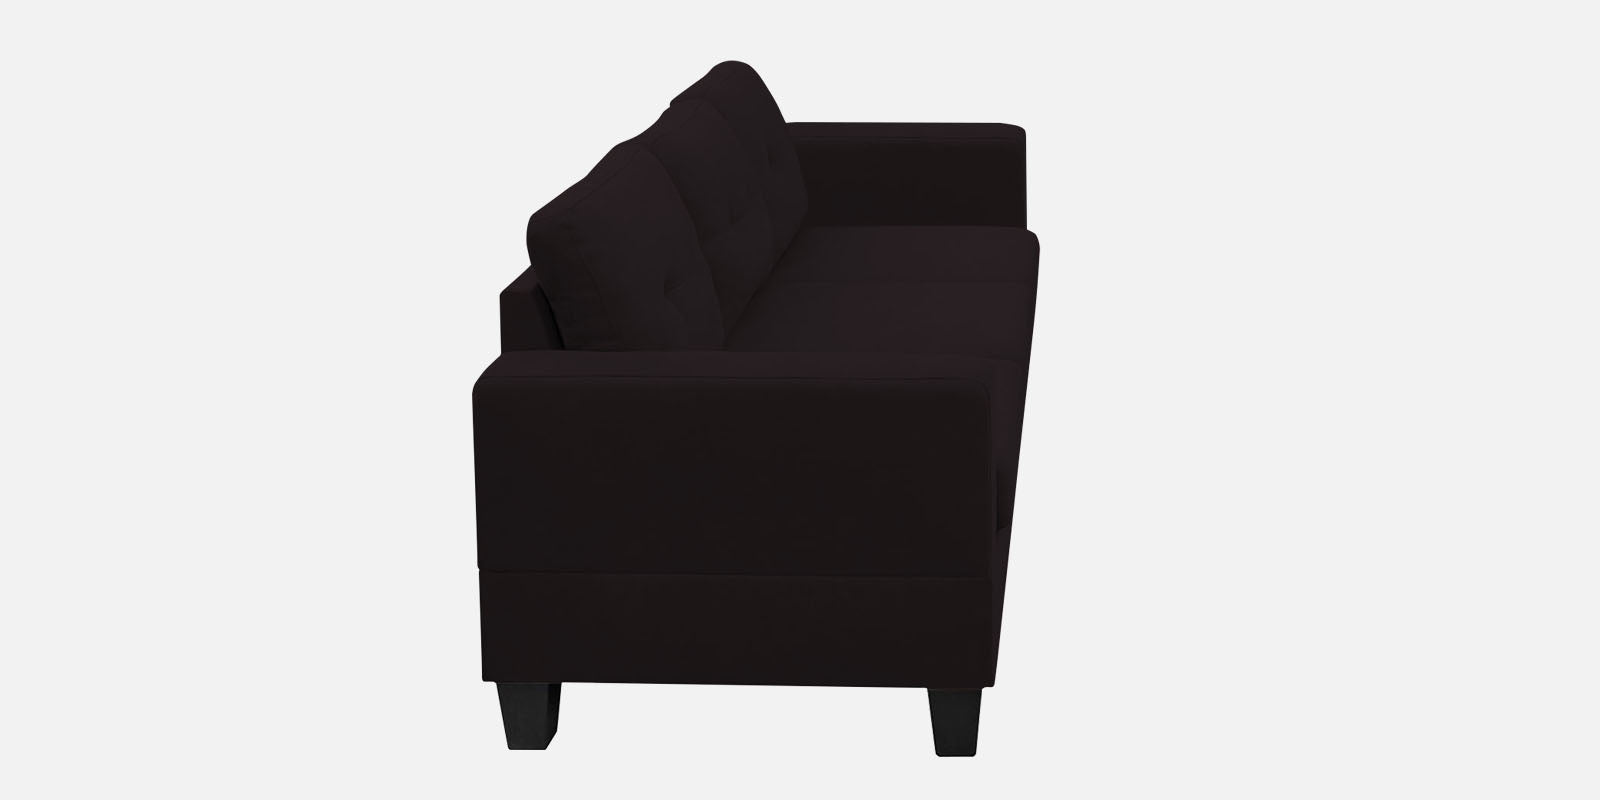 Thomas Fabric 3 Seater Sofa in Cara Brown Colour